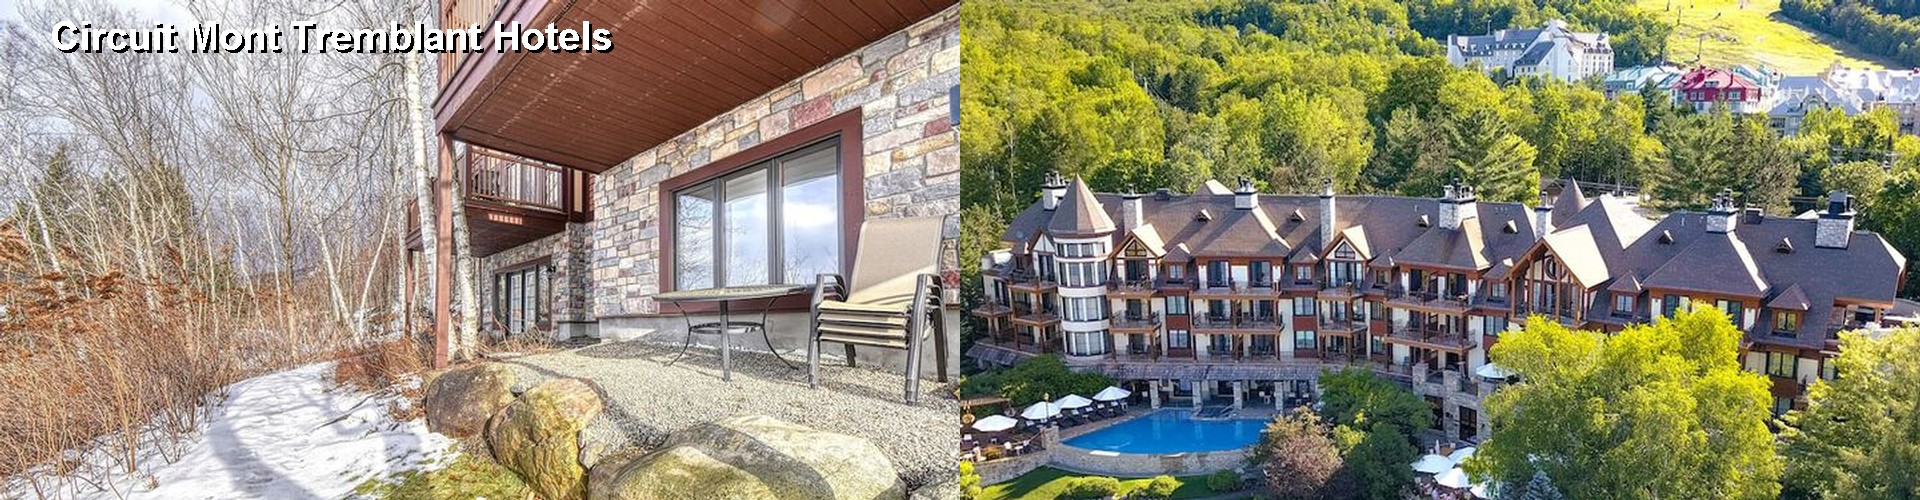 5 Best Hotels near Circuit Mont Tremblant